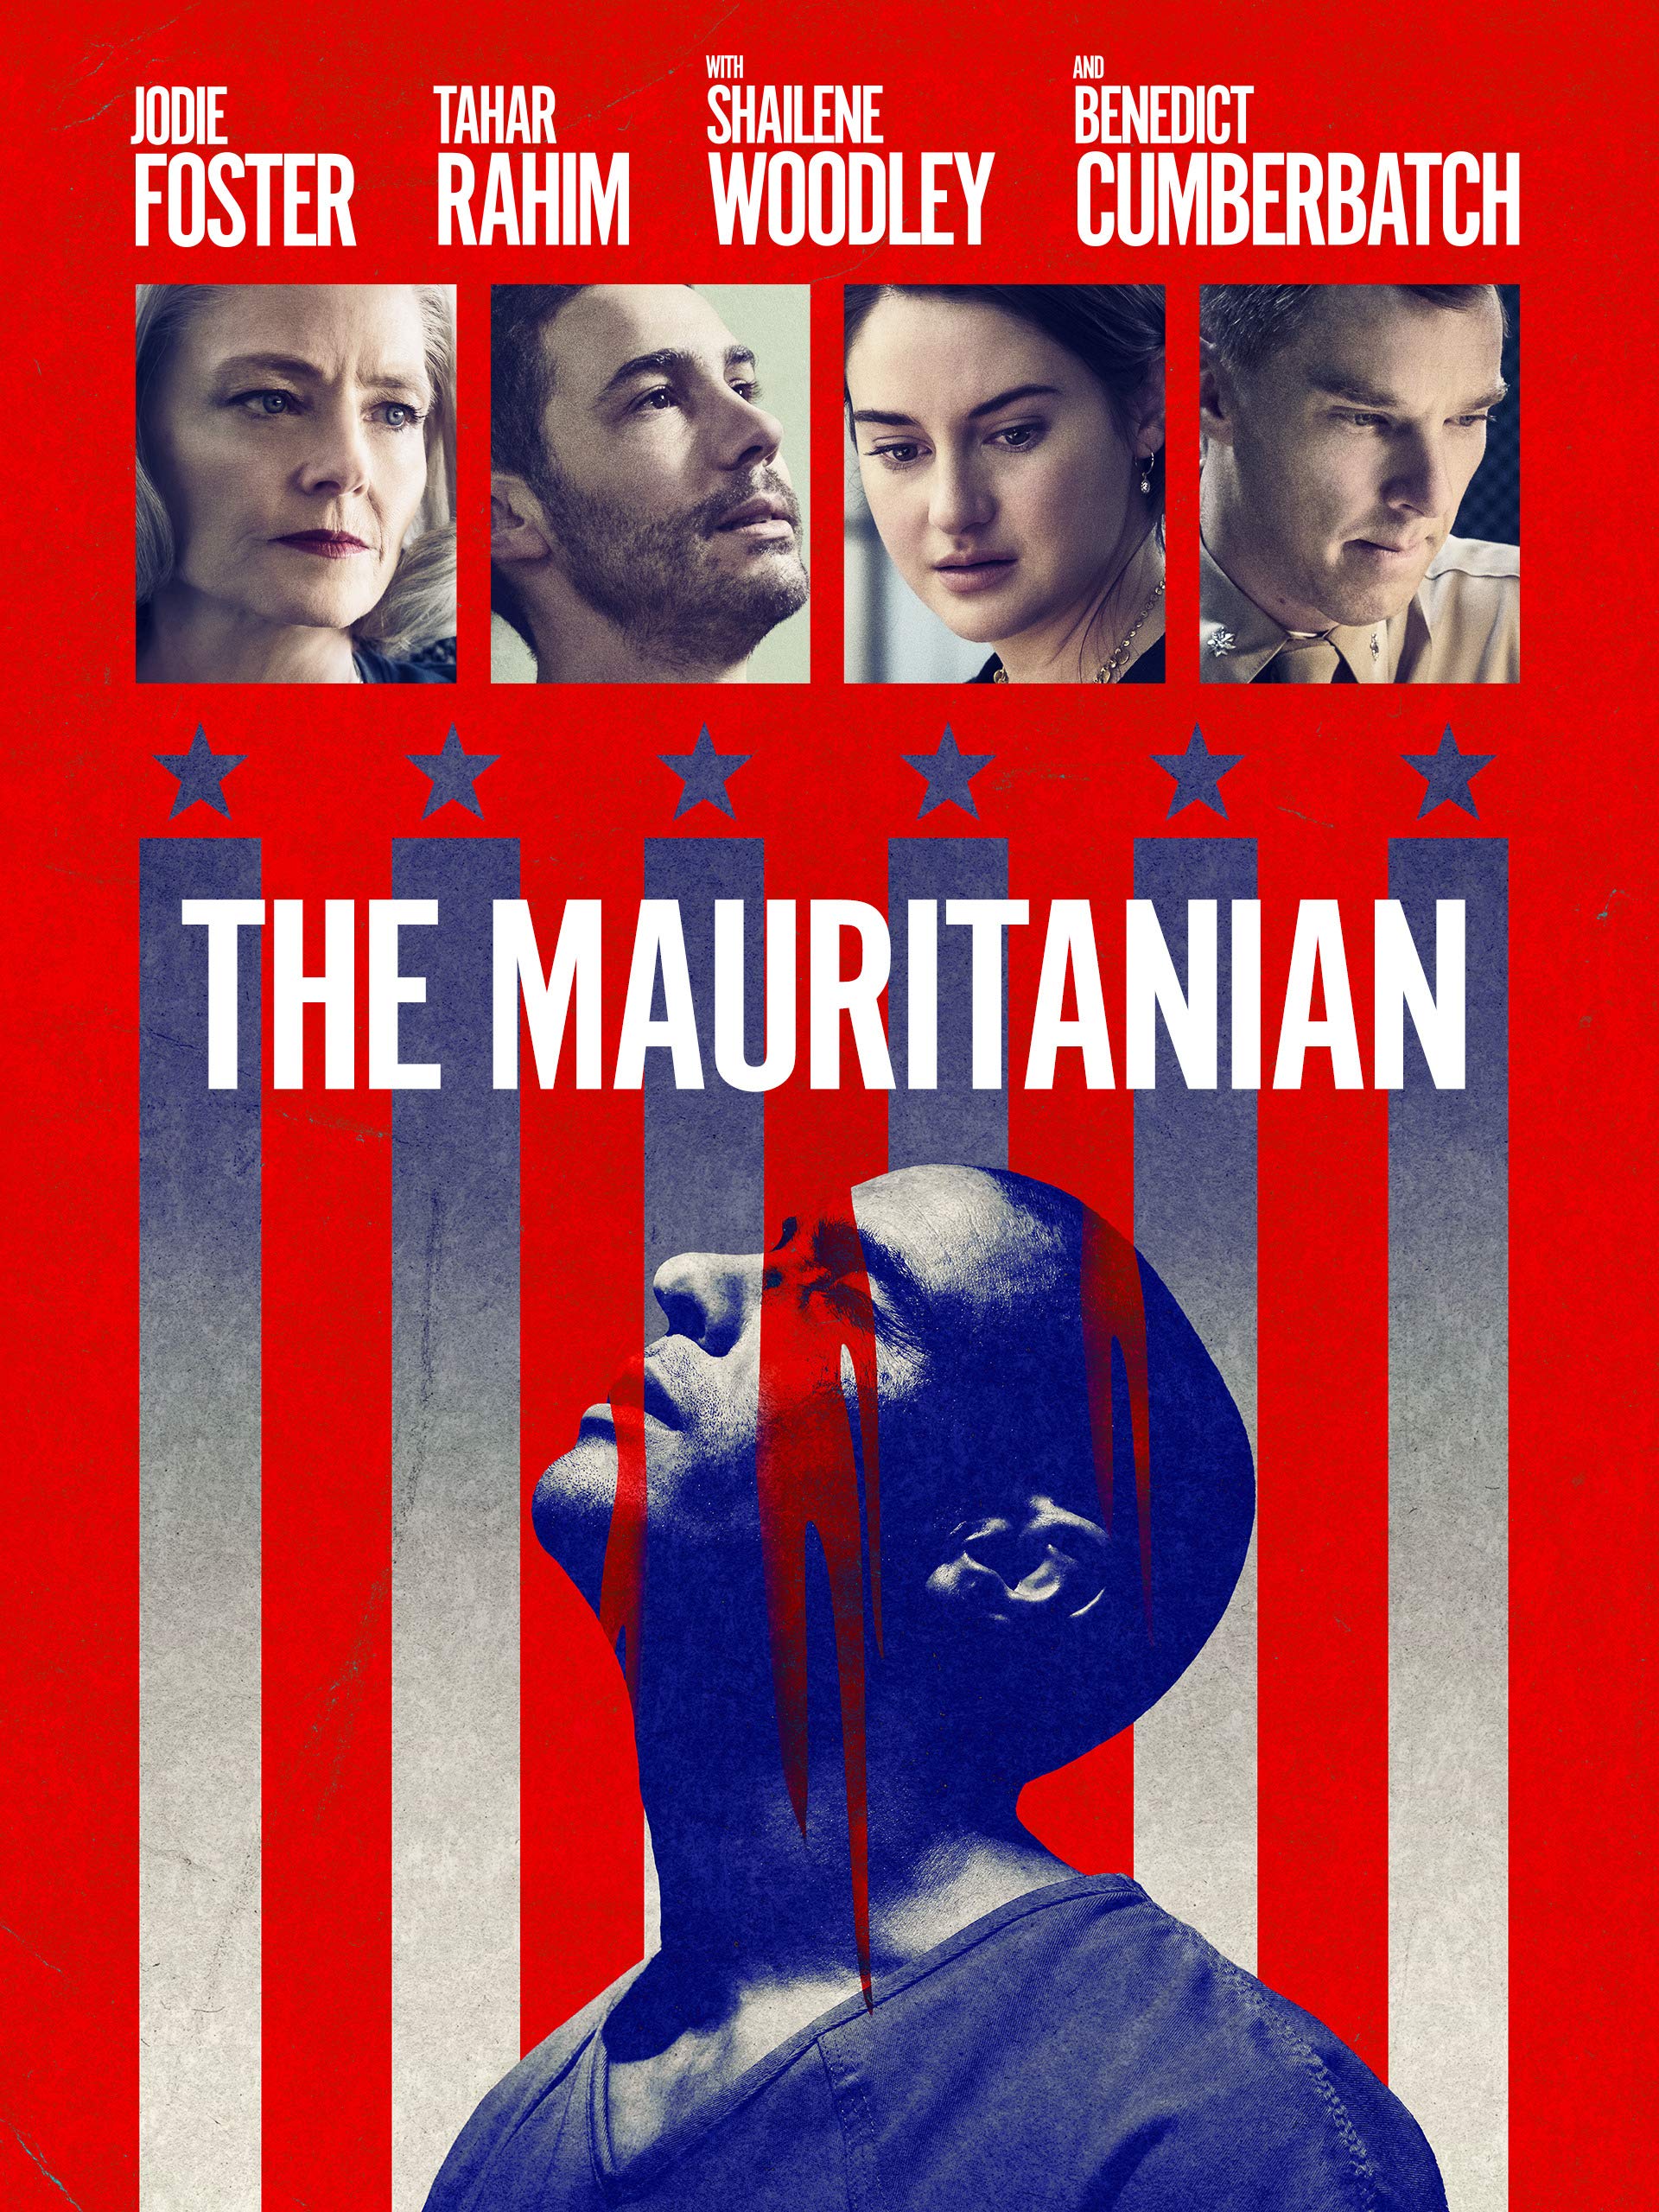 The Mauritanian(A) English Drama/Legal drama Film- Rating 3* - FilmGappa